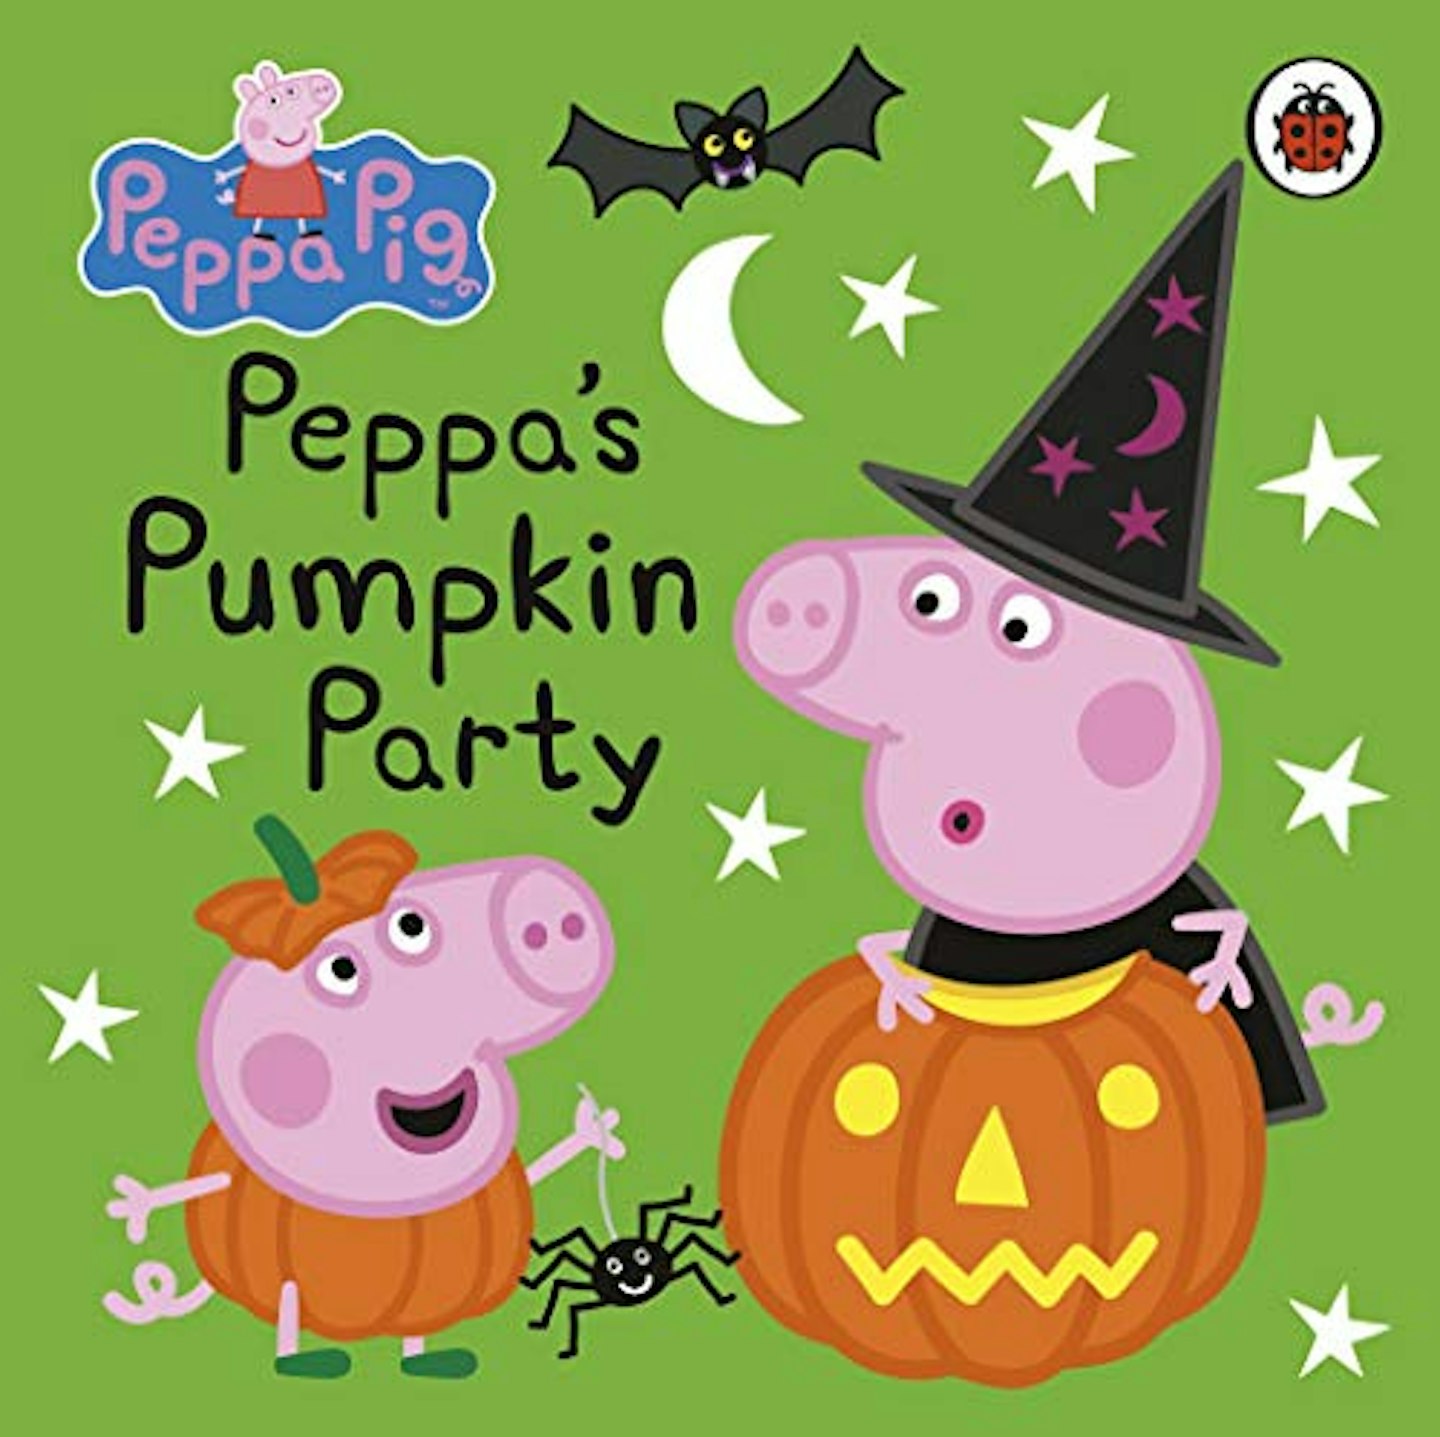 Peppau2019s Pumpkin Party